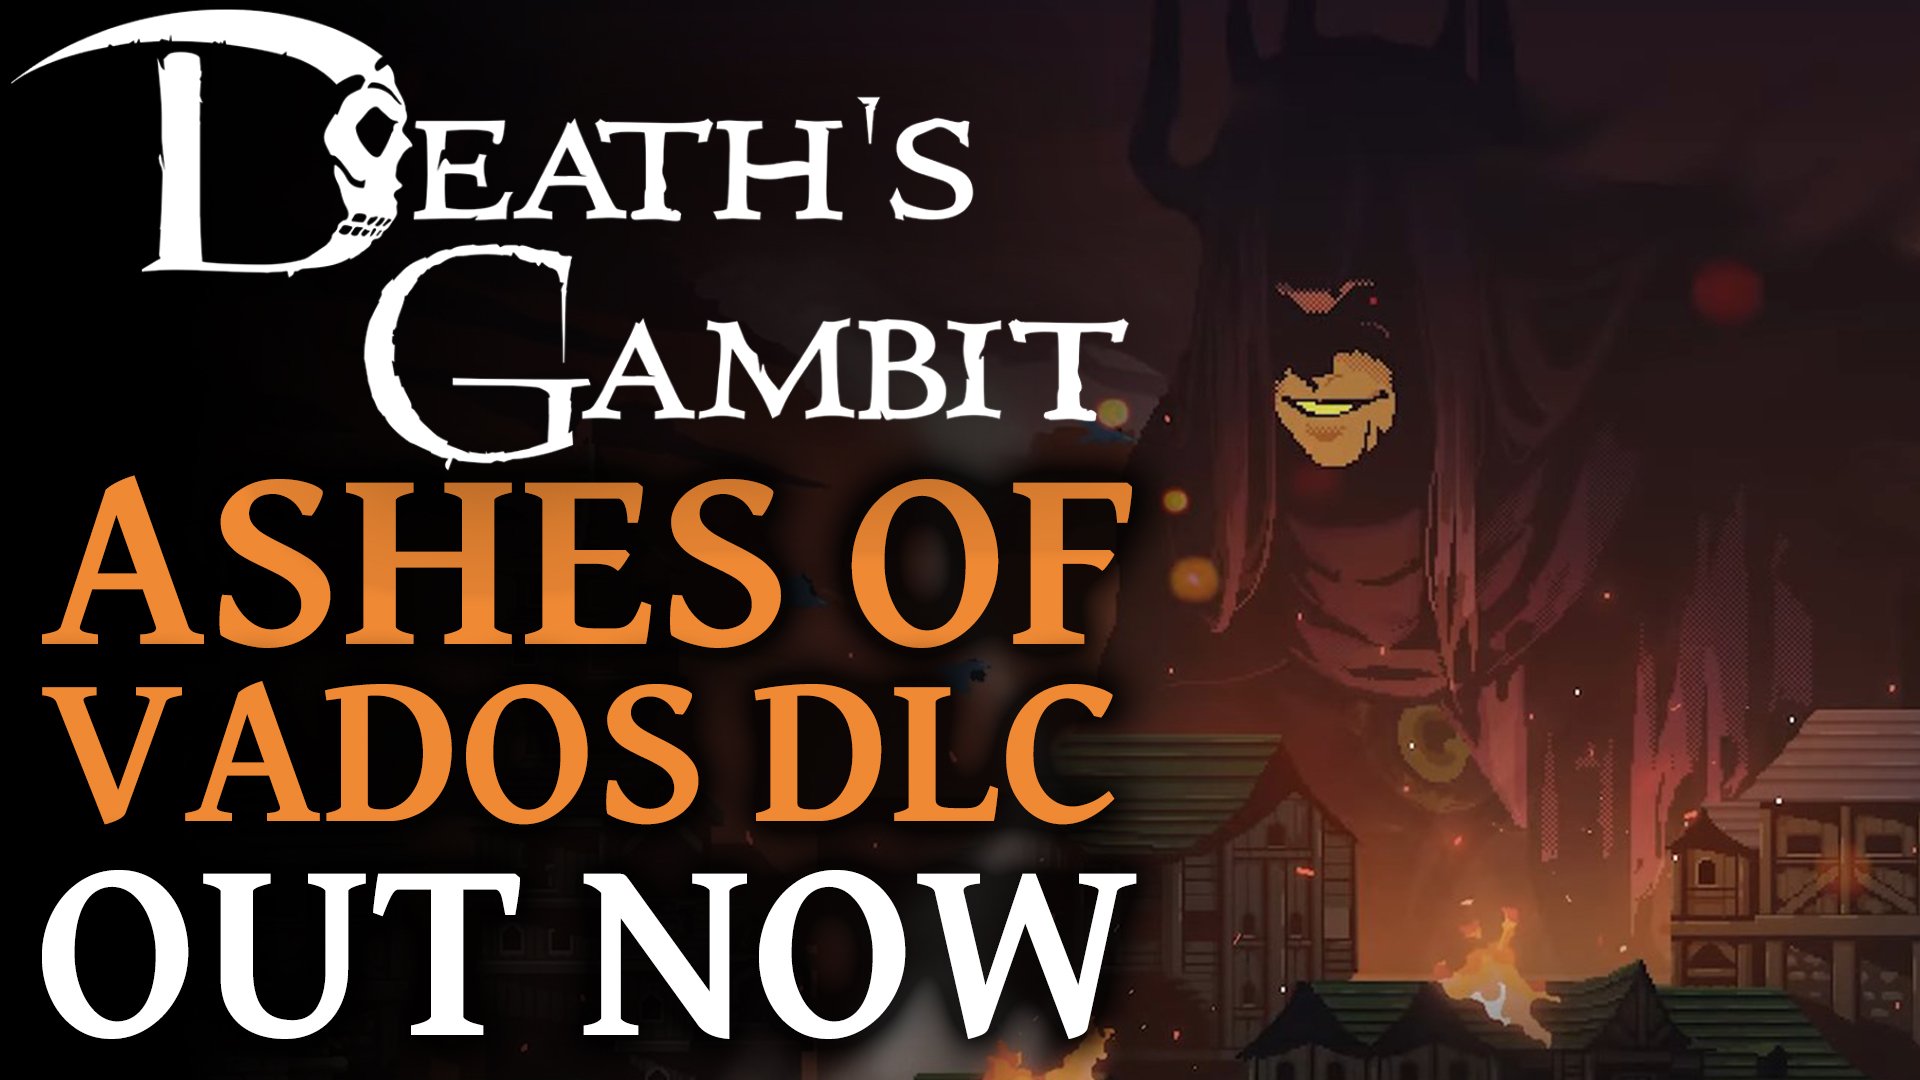 Death's Gambit receberá DLC gratuito com novas armas, fases